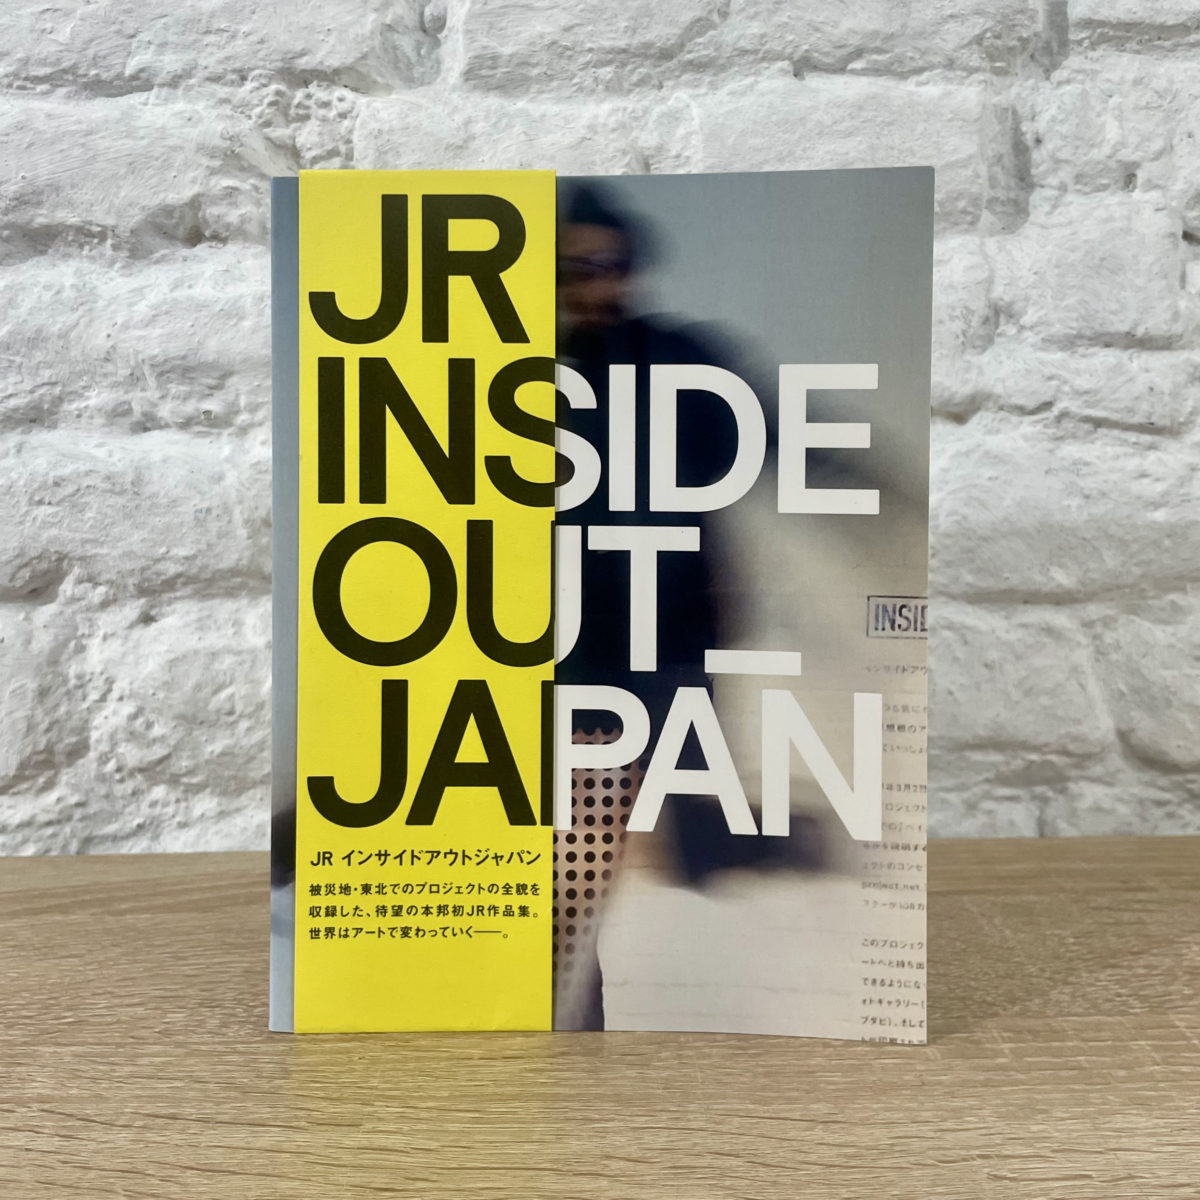 Inside out Japan